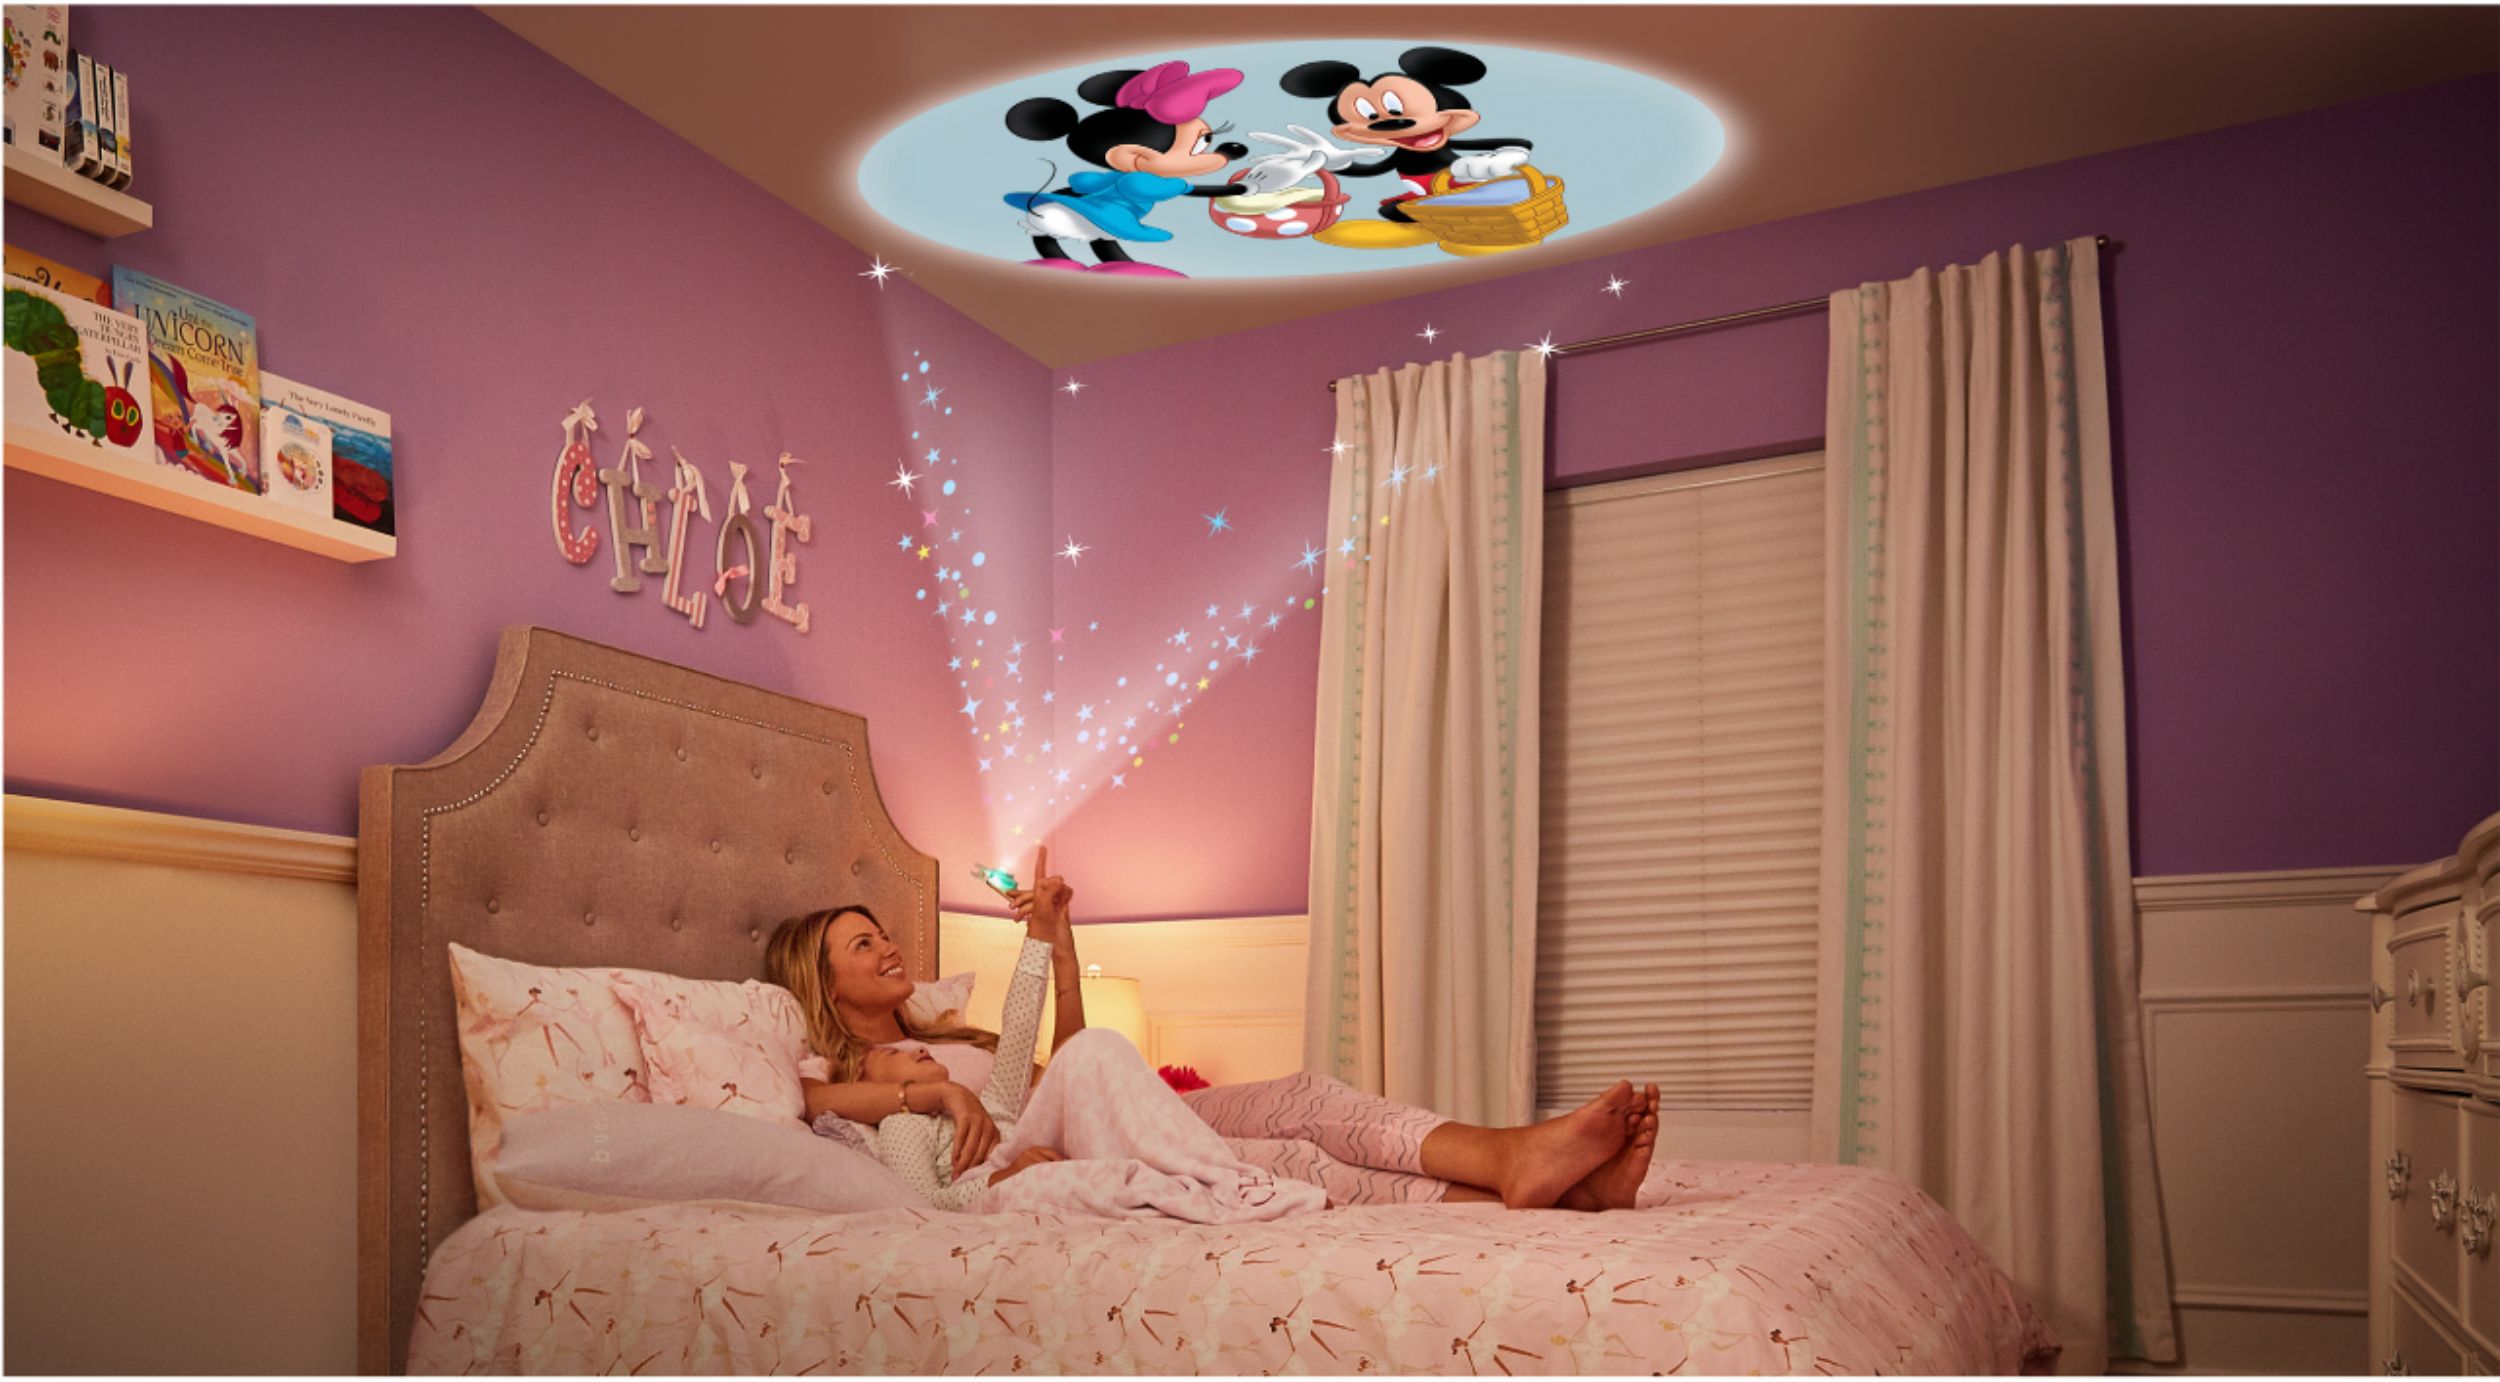 Best Buy: Moonlite Disney Gift Pack Storybook Projector for Most  Smartphones 6045979